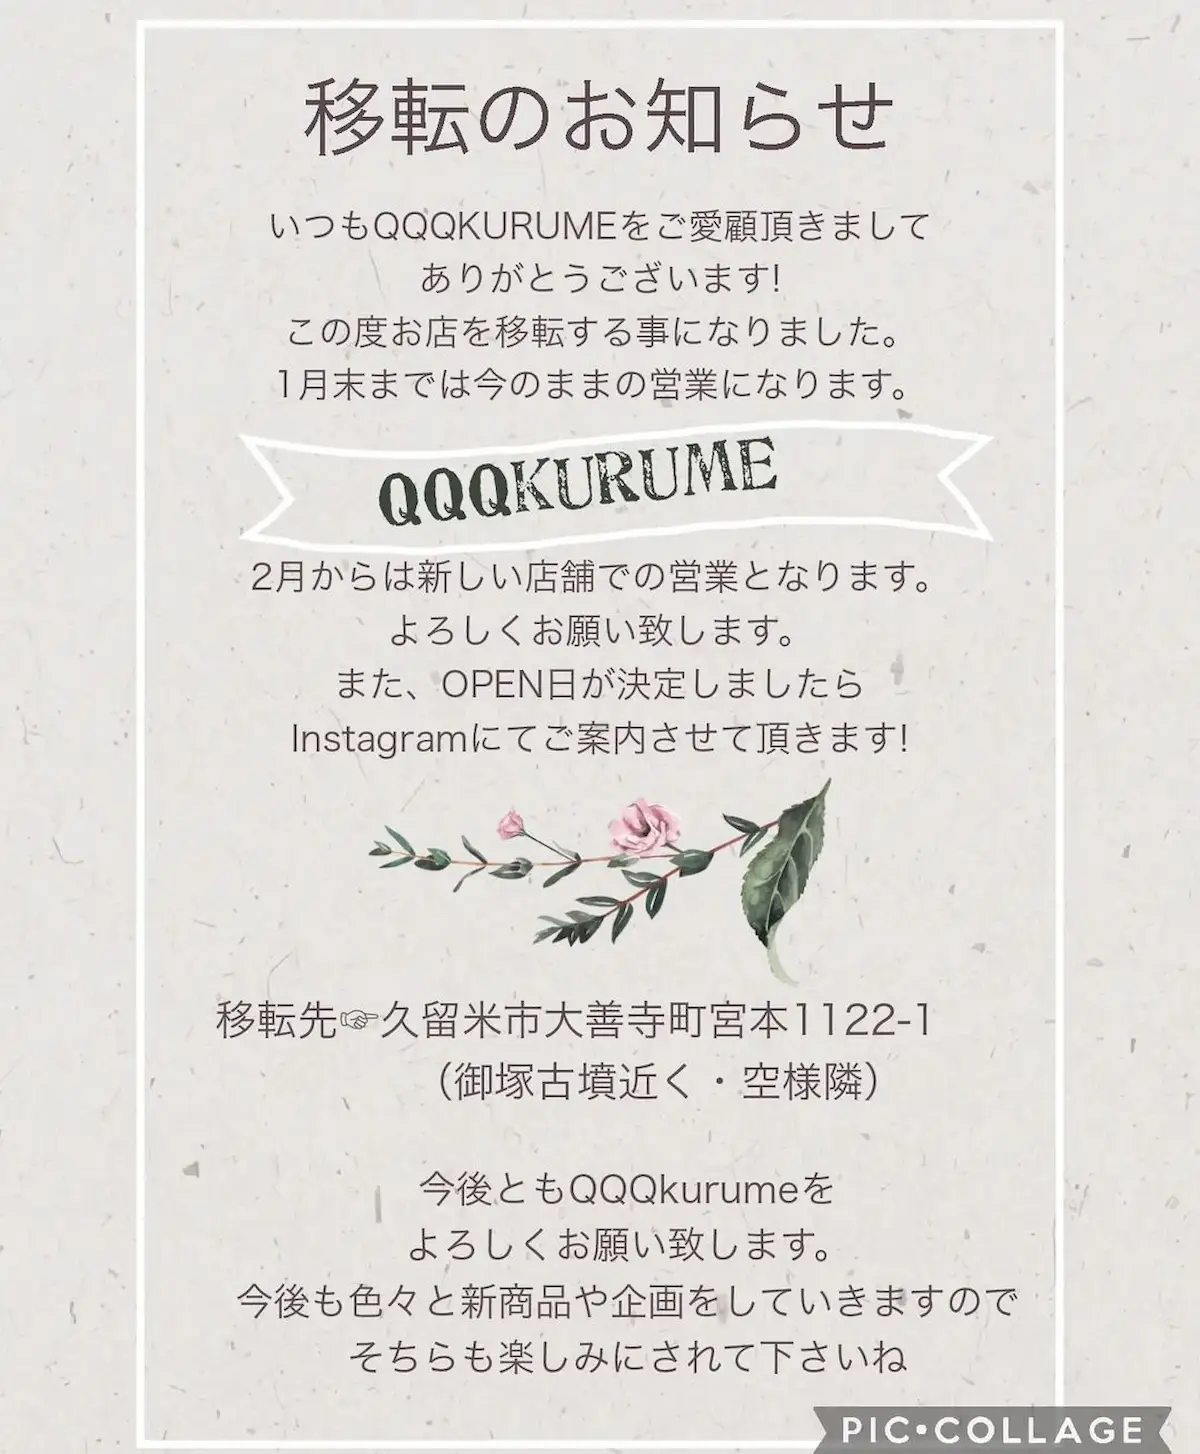 QQQ-kurumeが久留米市大善寺町に移転するみたい。2月オープン予定